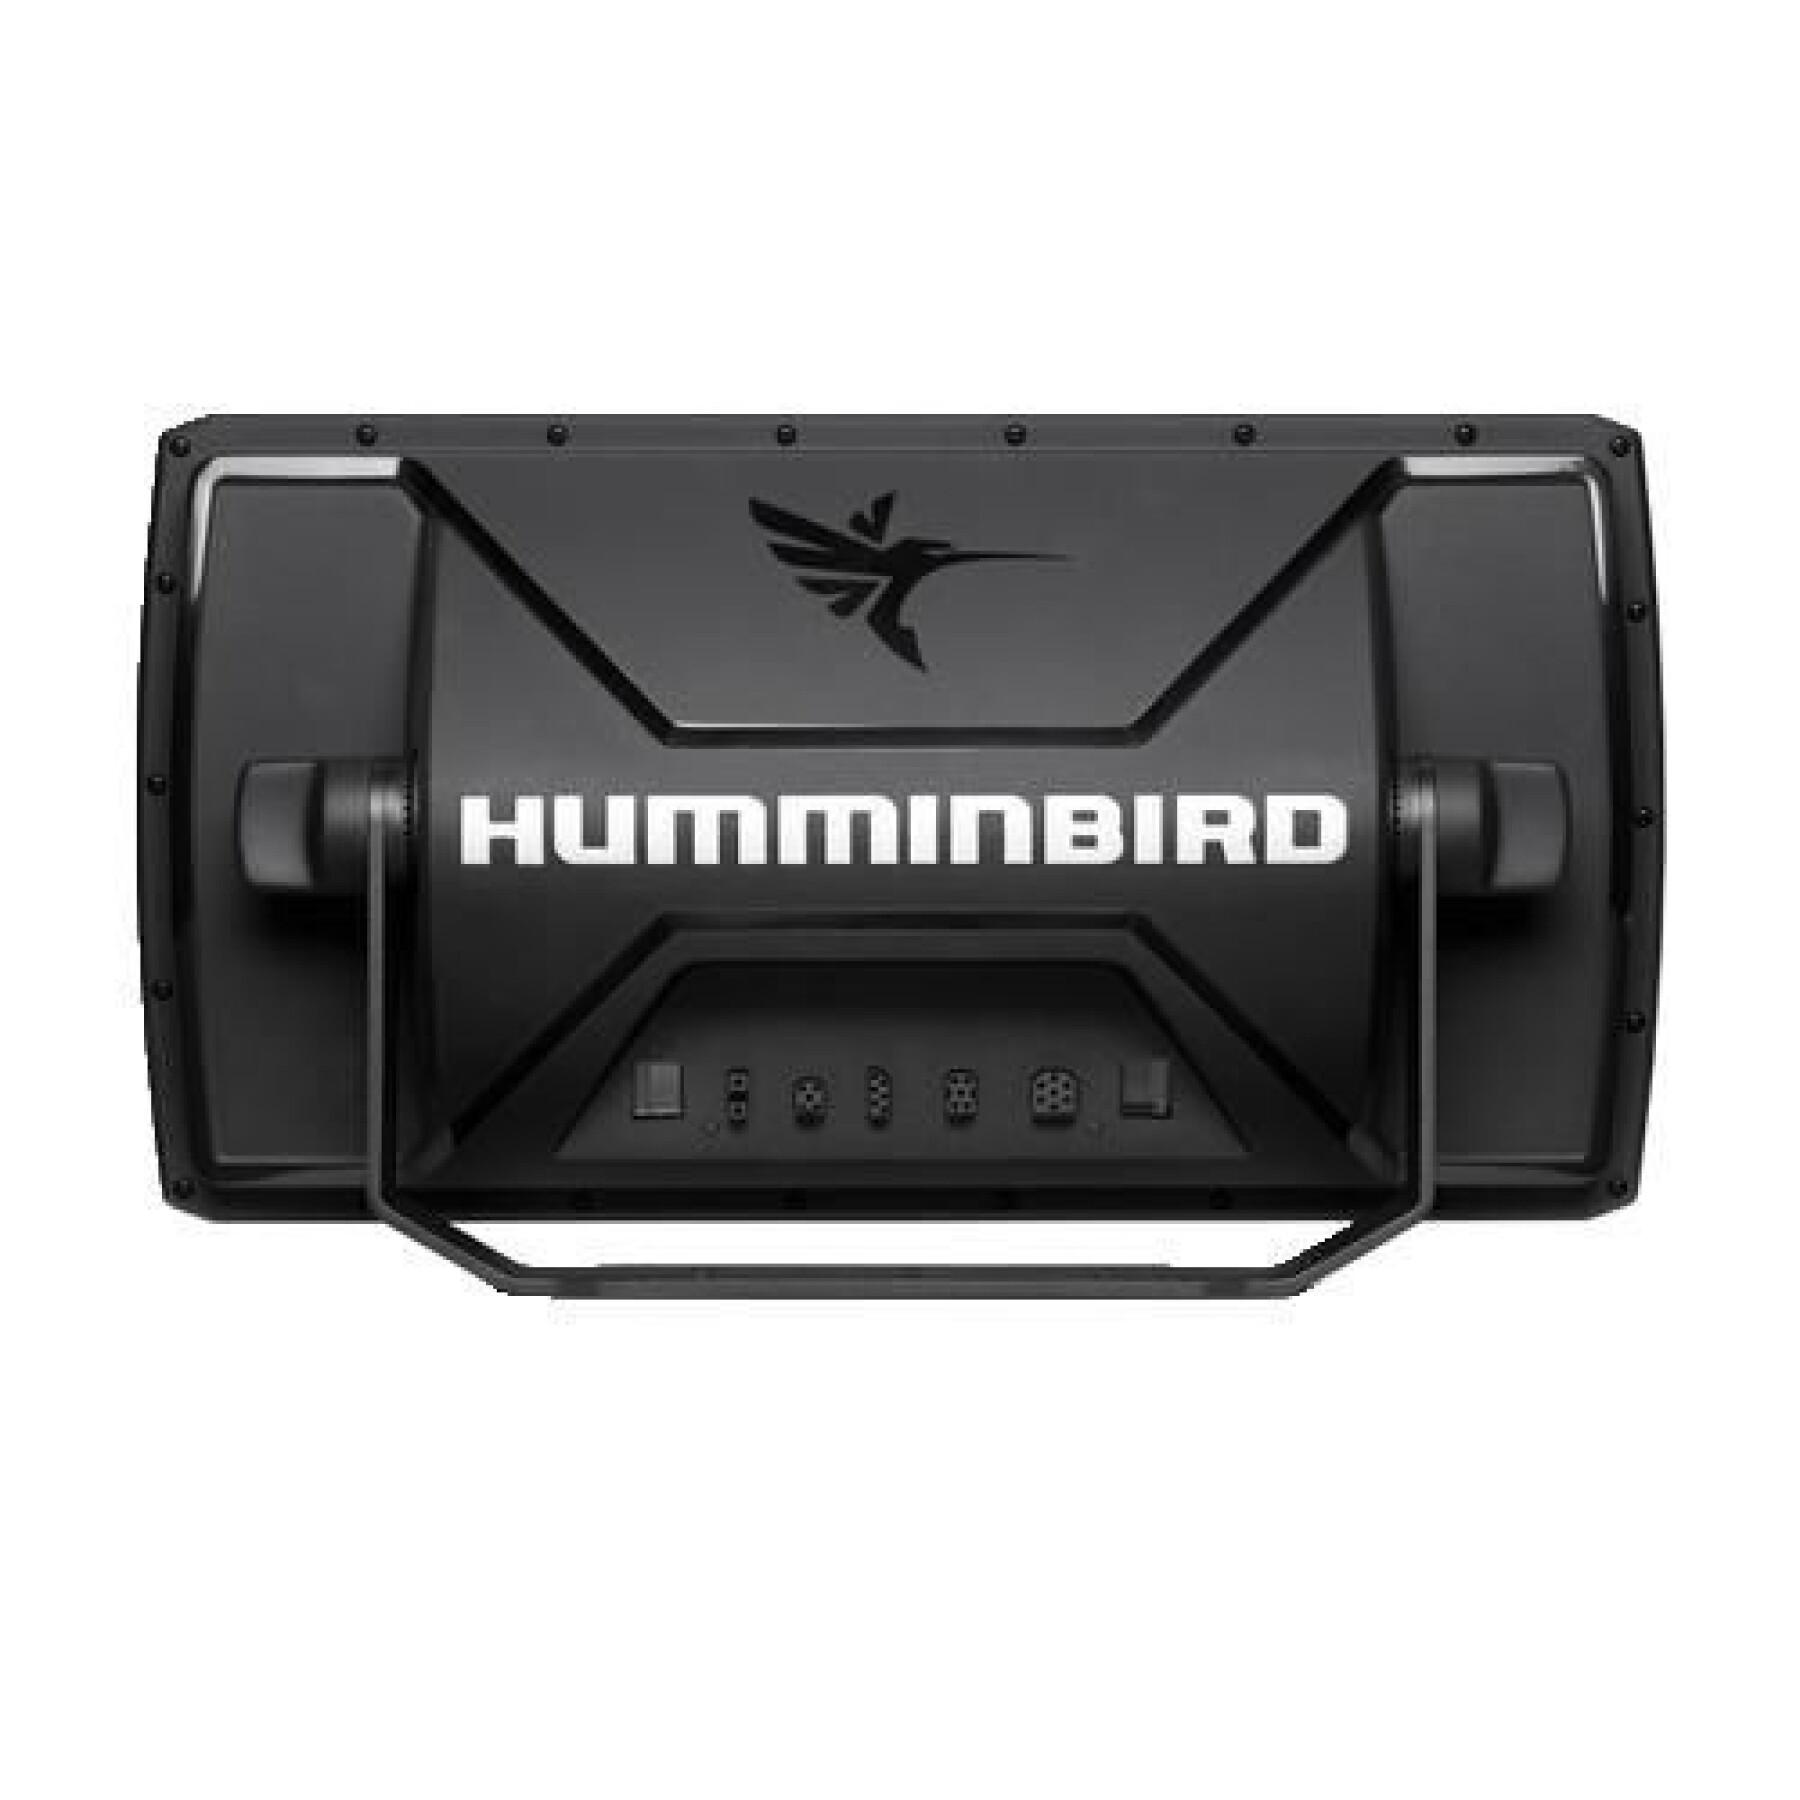 Gps and sounder Humminbird Helix 10G4N Chirp Mega SI+(411420-1M)